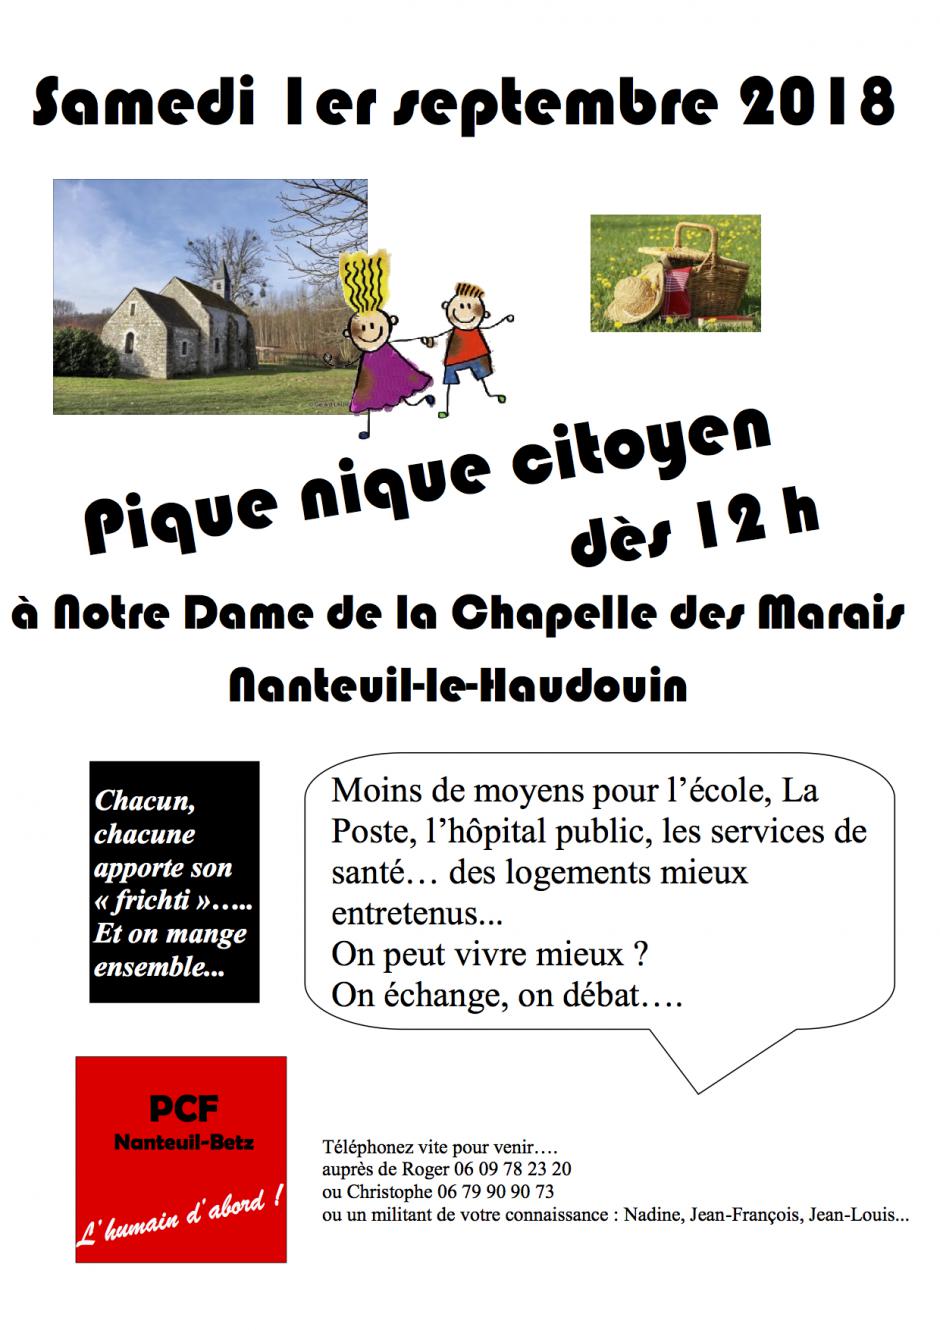 1er septembre, Nanteuil-le-Haudouin - Pique-nique citoyen